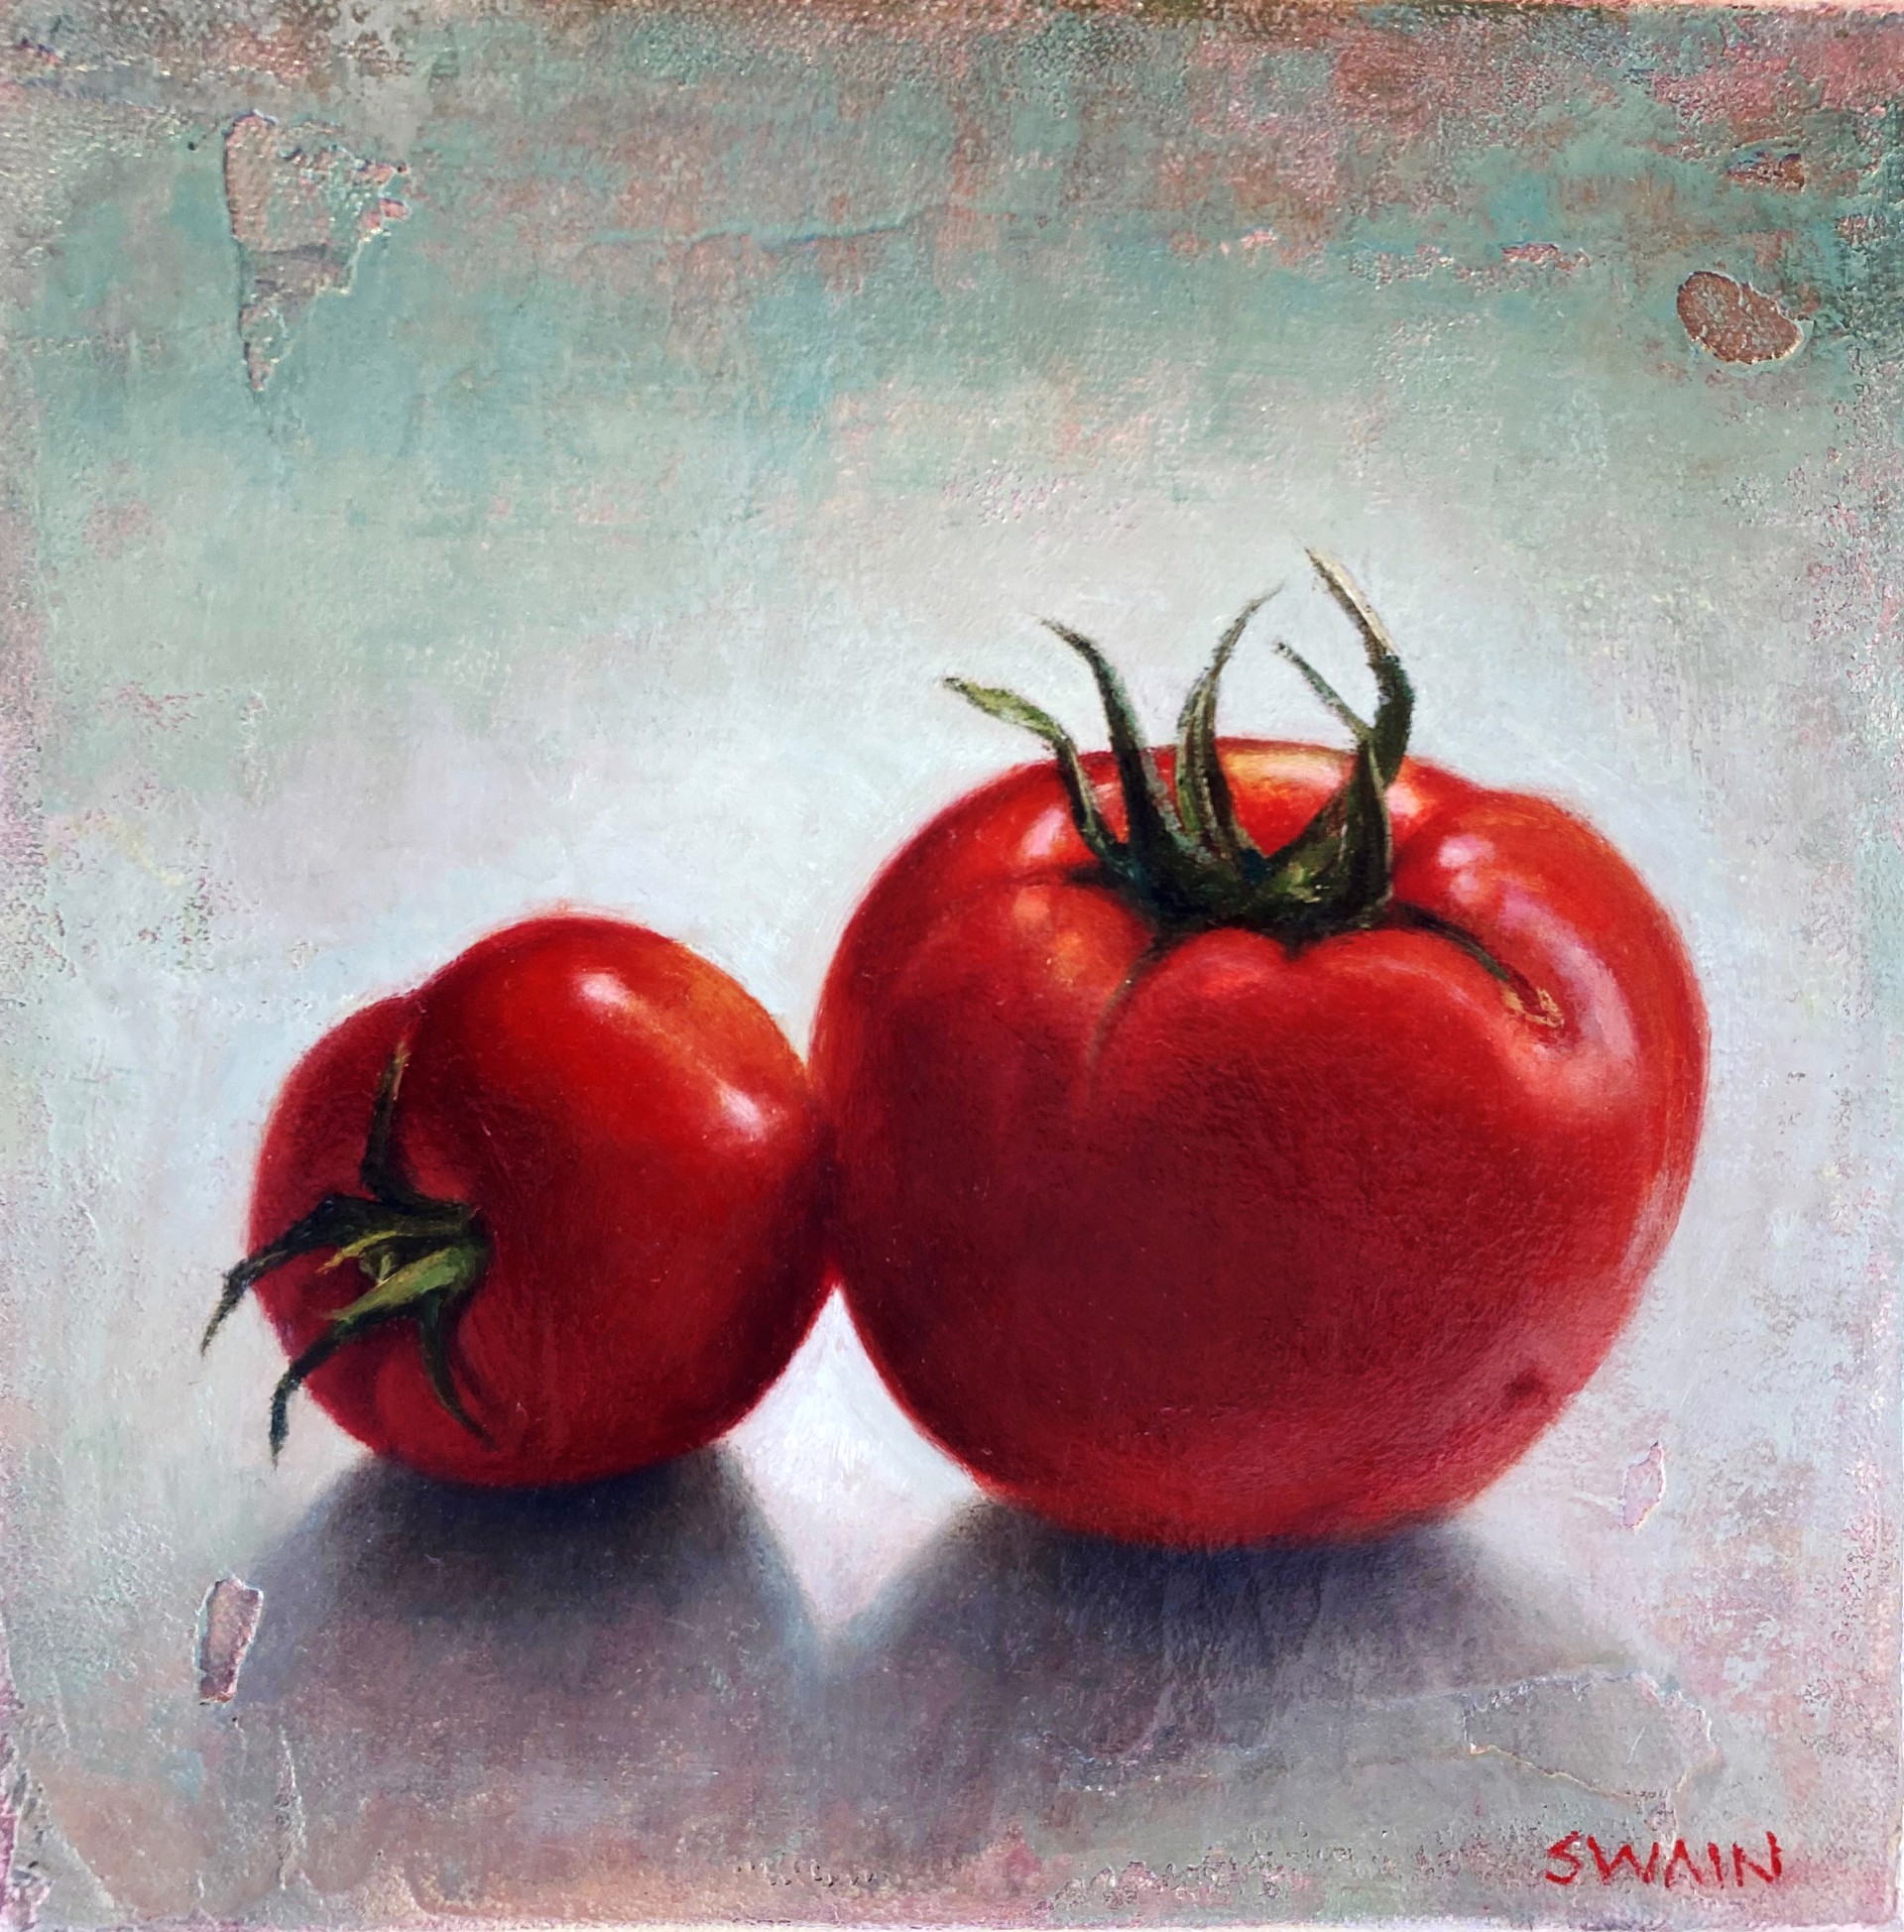 Garden Tomatoes by Tyler Swain